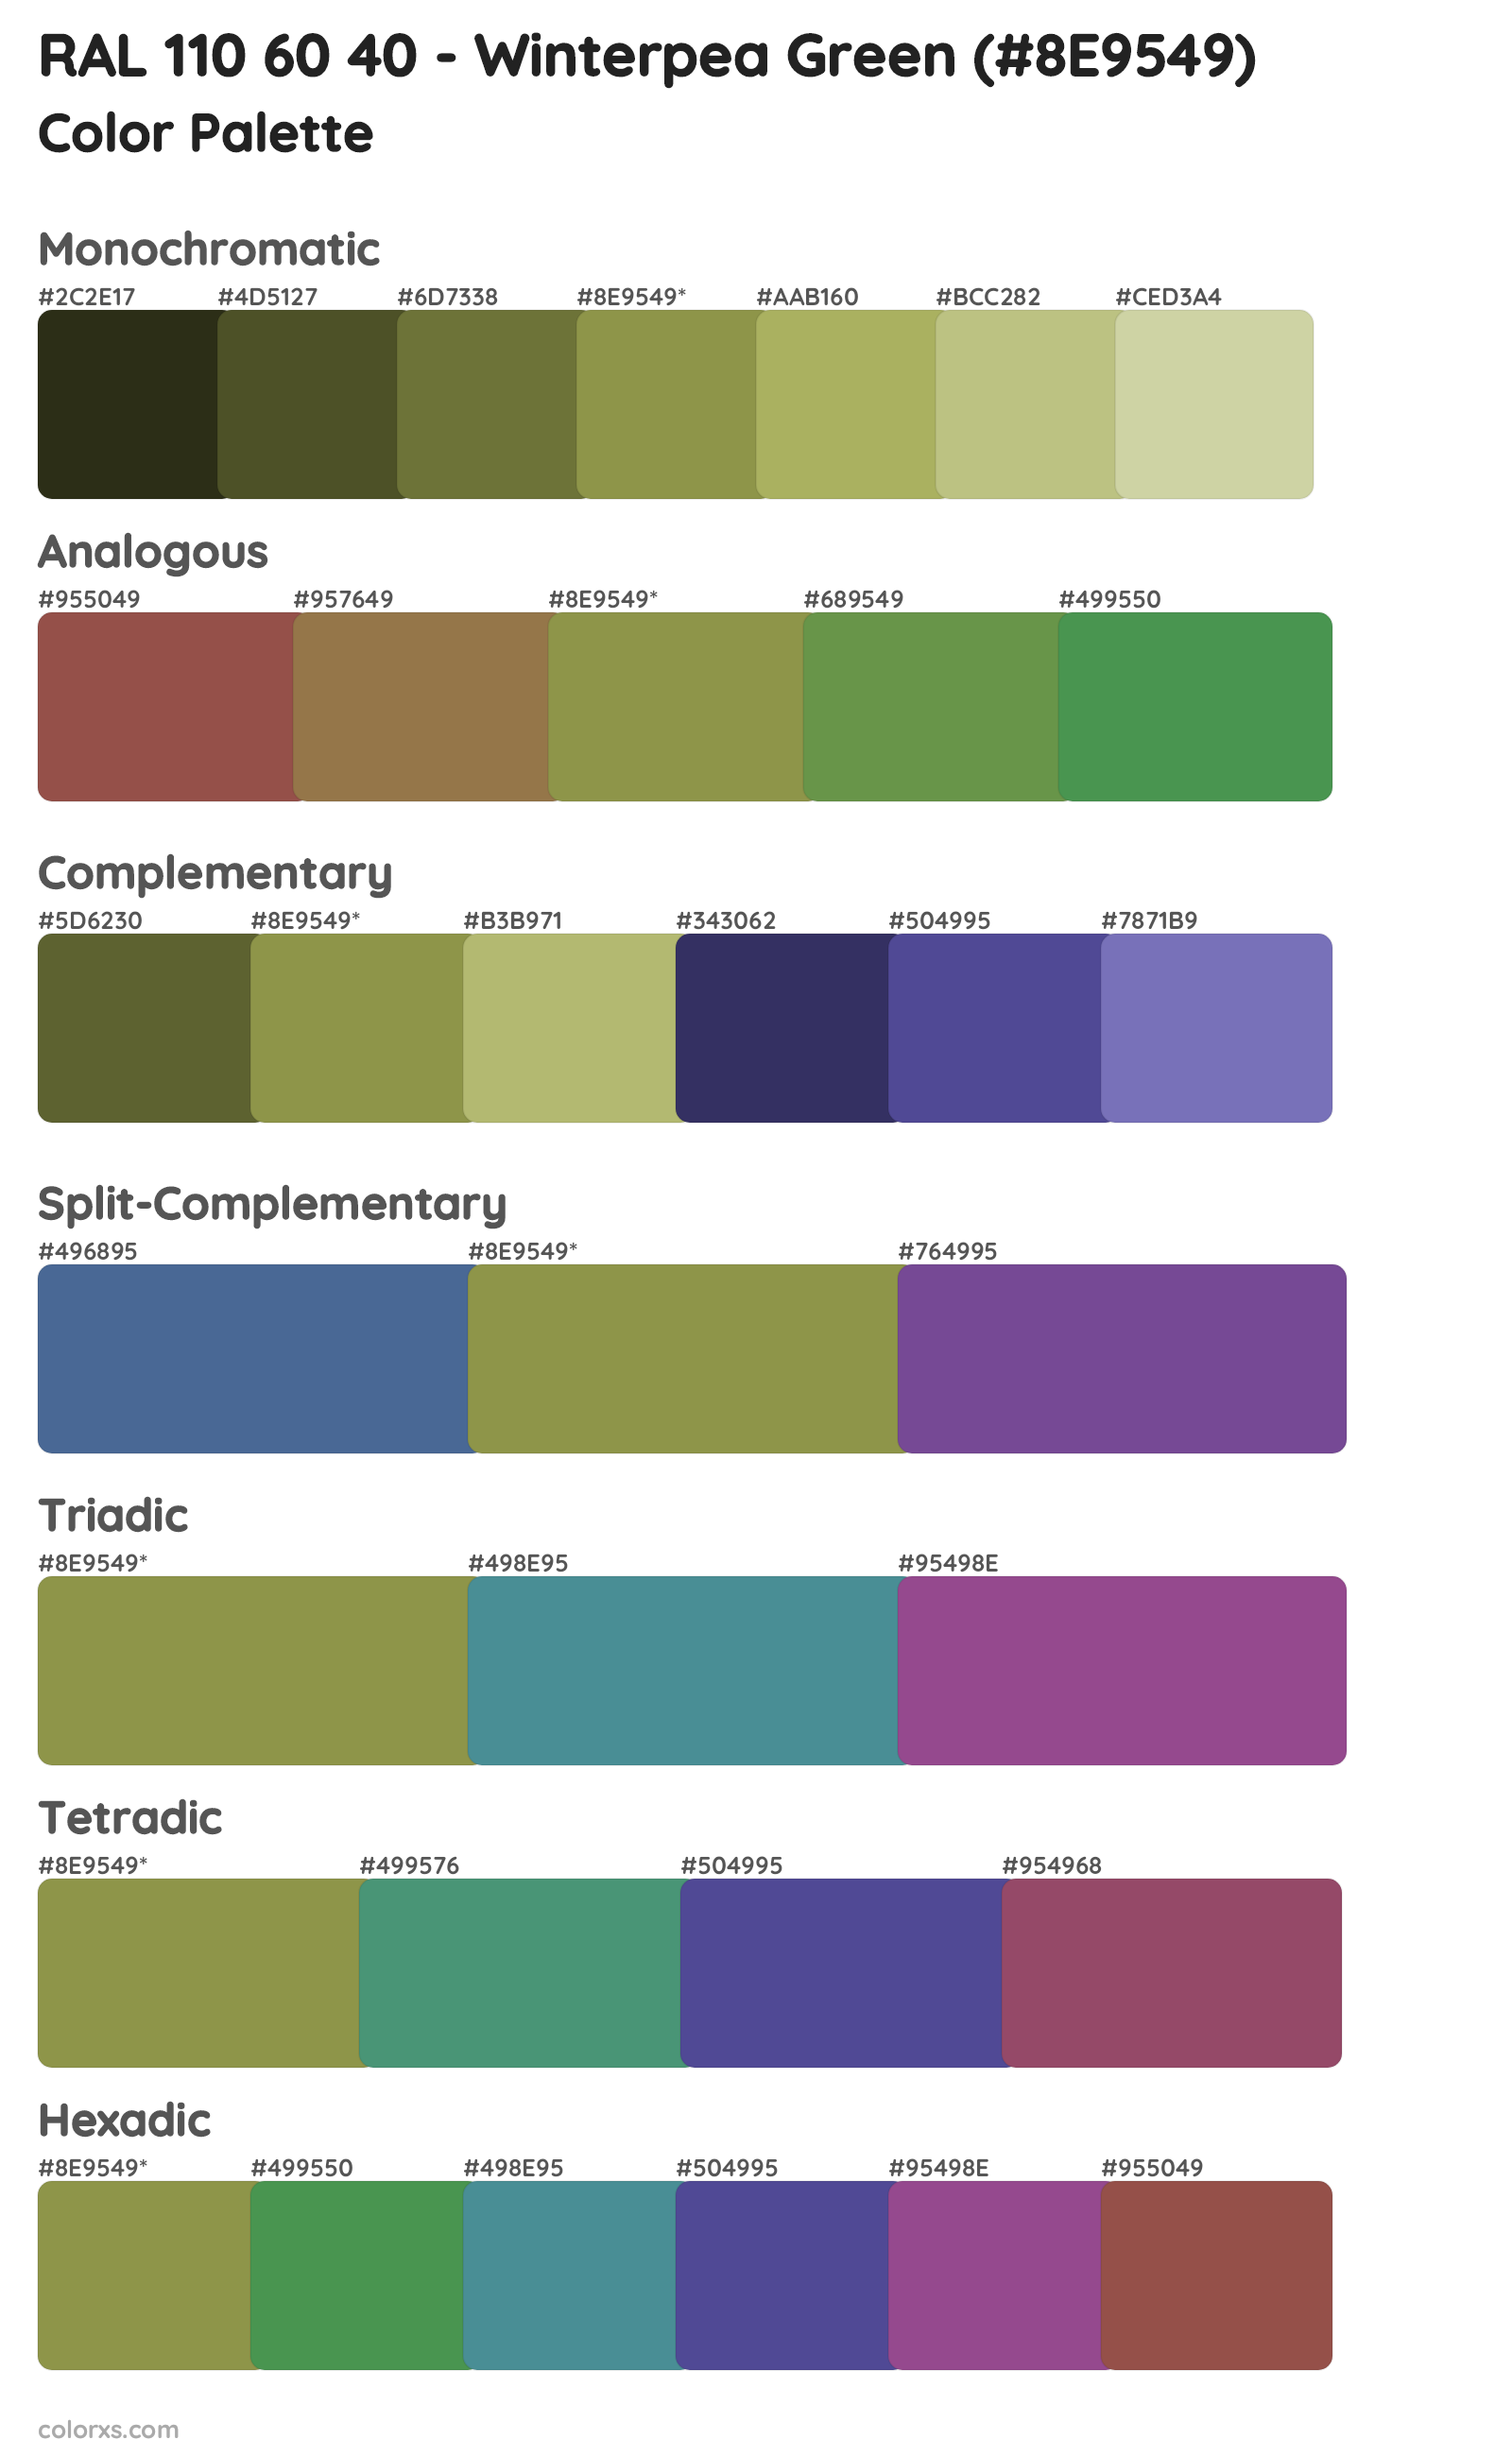 RAL 110 60 40 - Winterpea Green Color Scheme Palettes